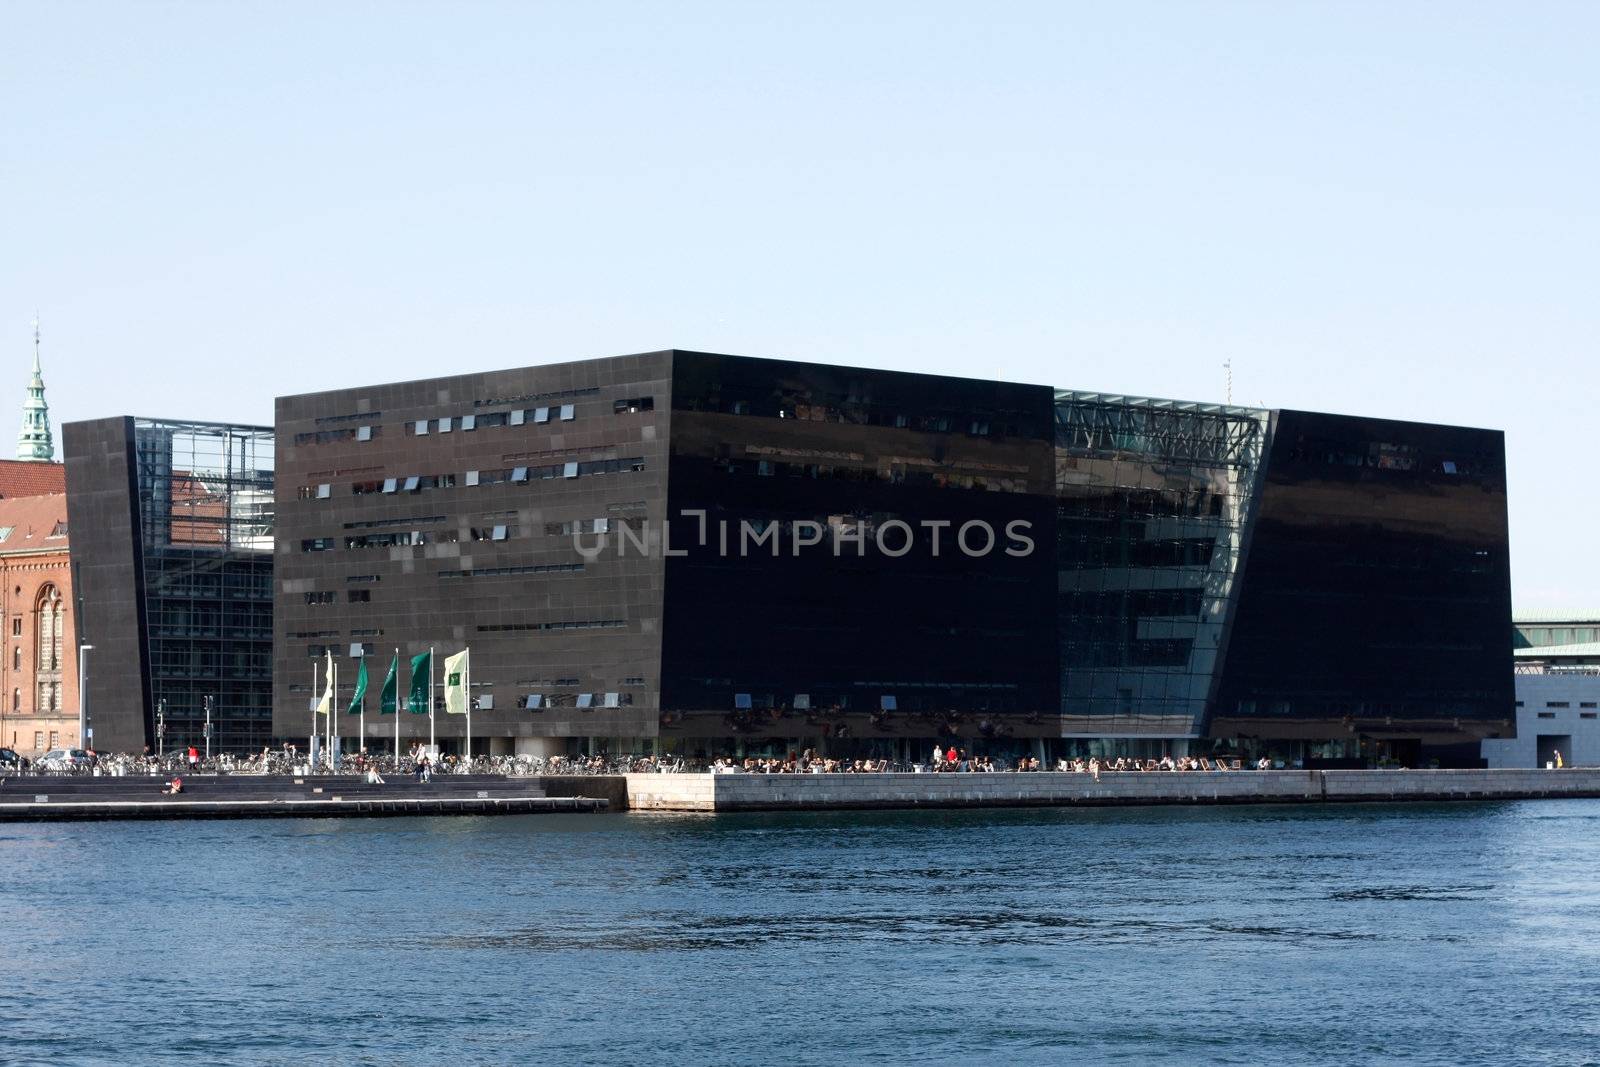 The Black Diamond in Copenhagen